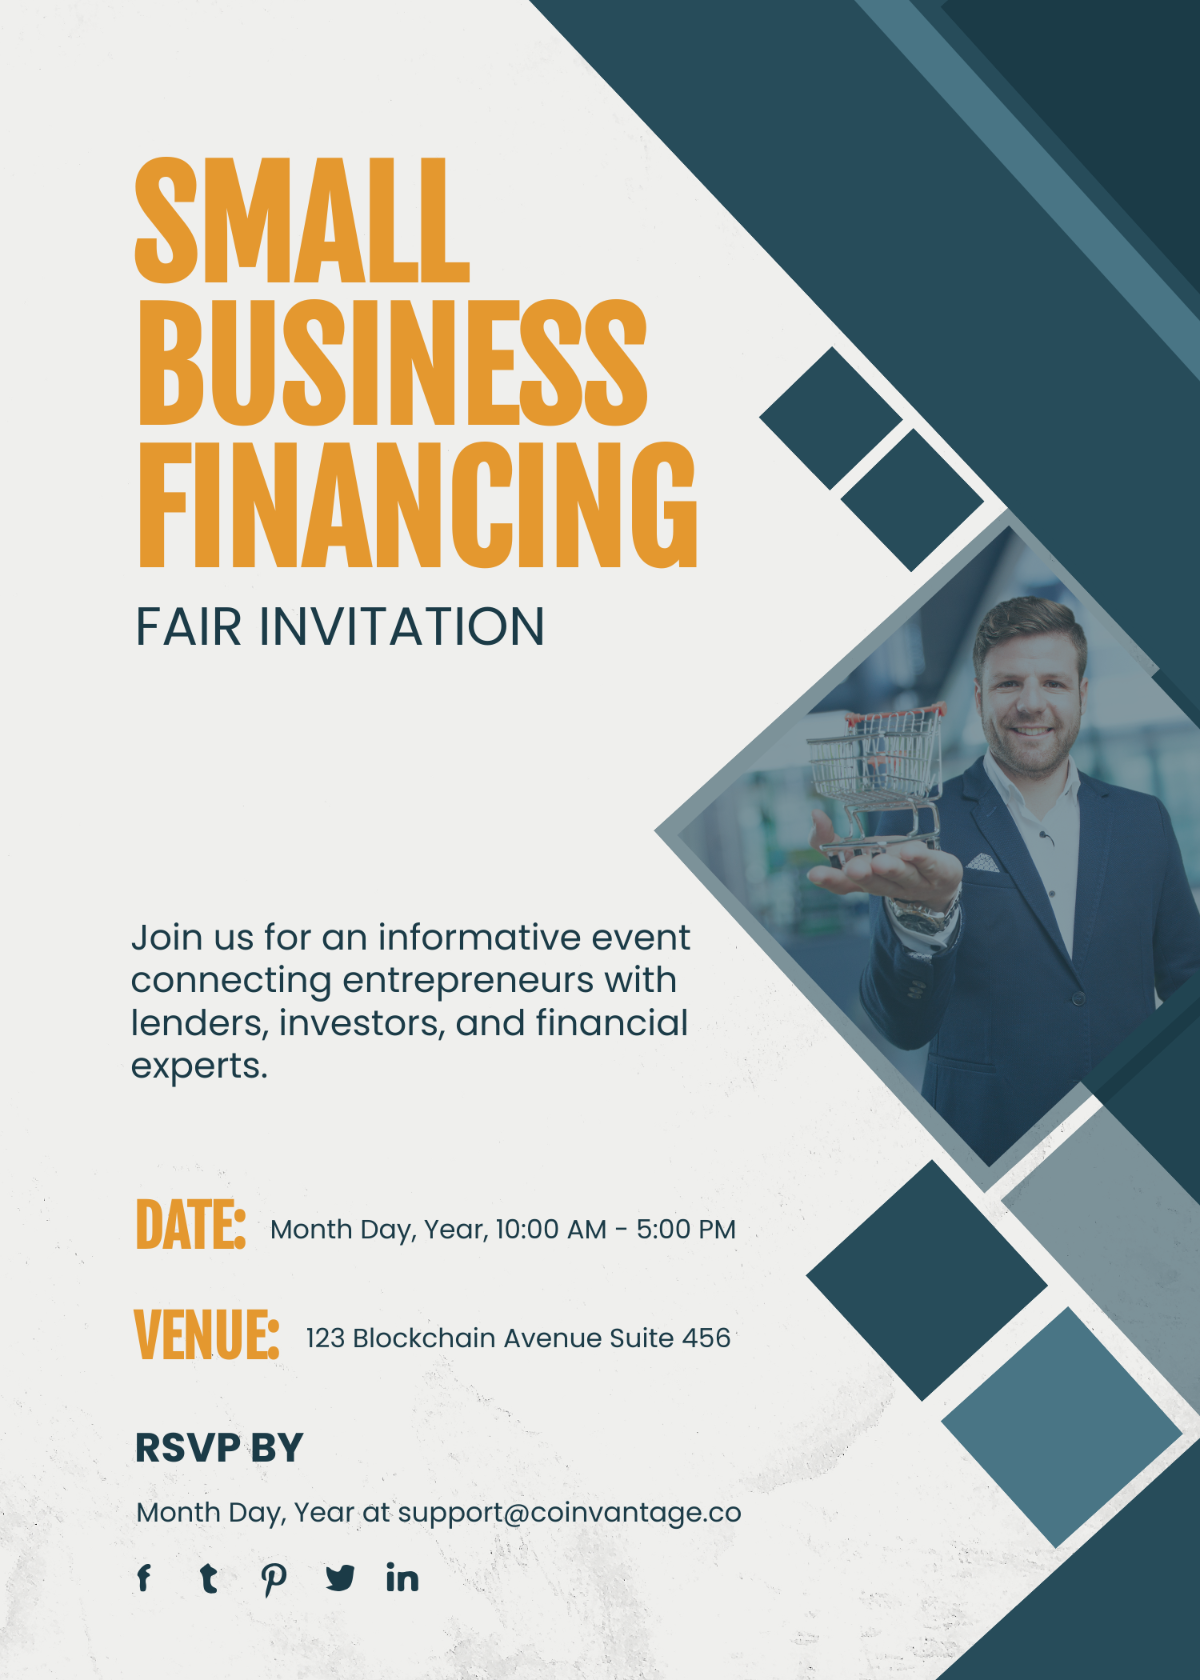 Small Business Financing Fair Invitation Card